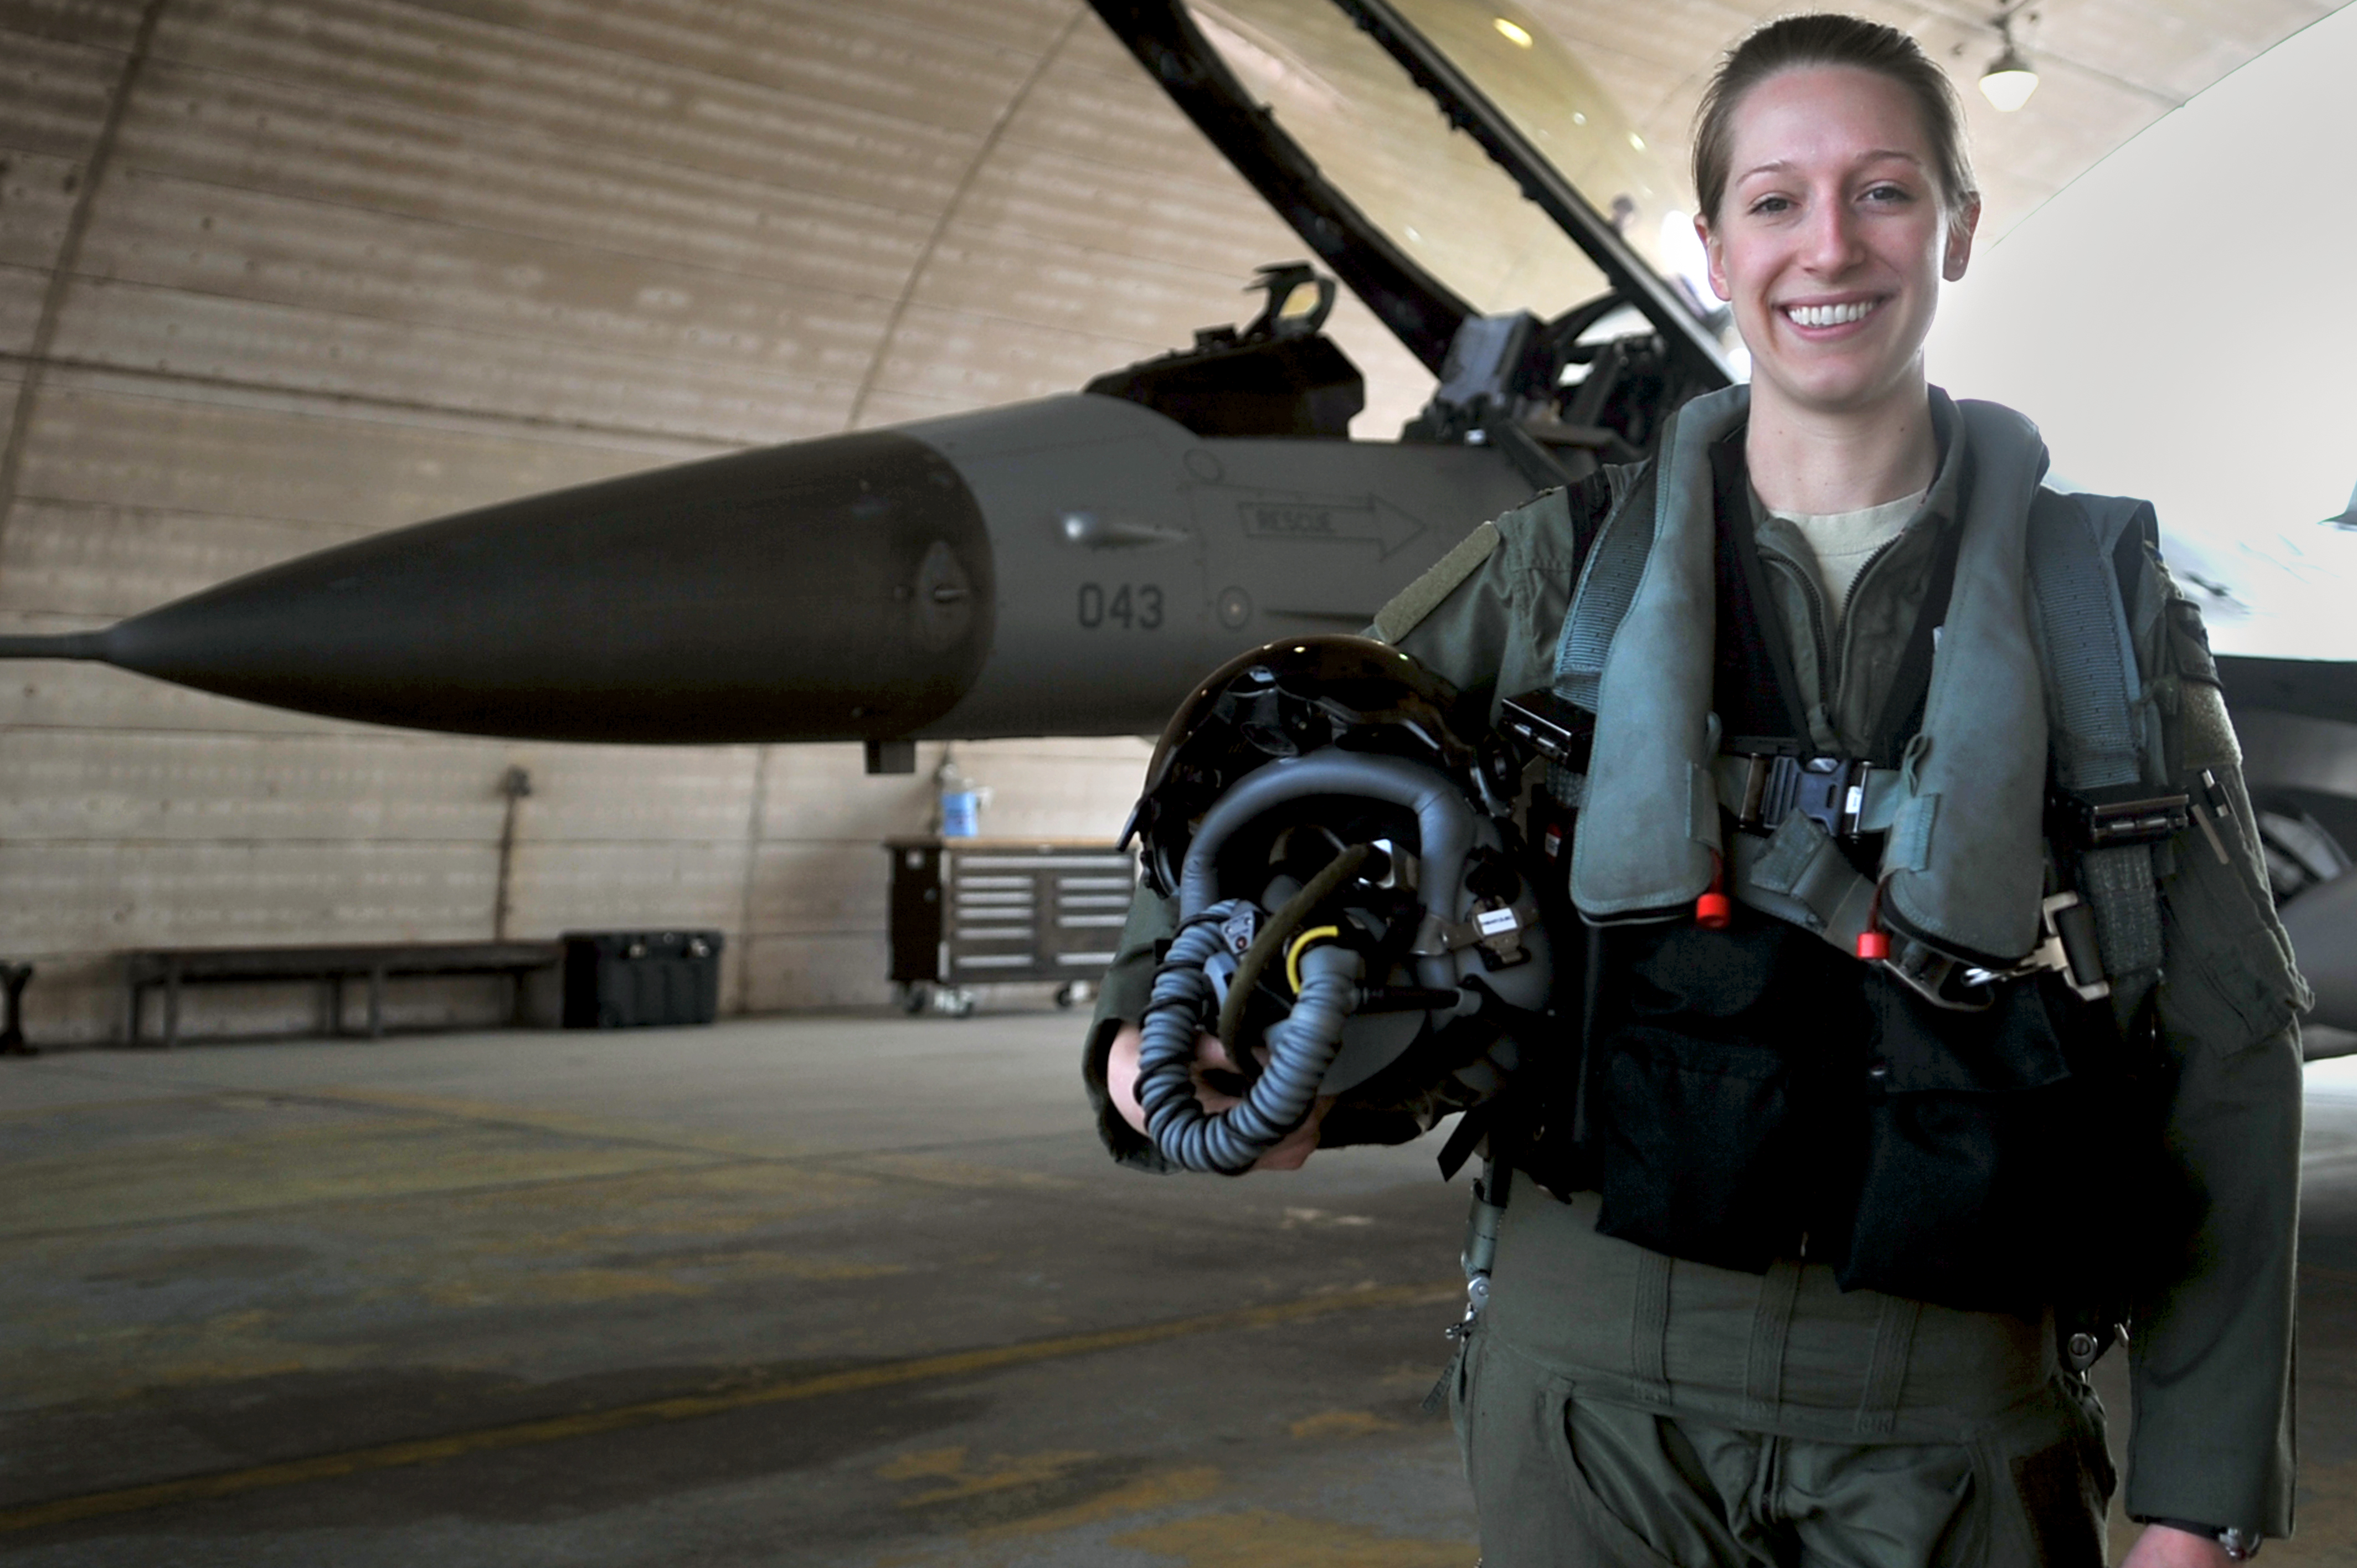 us air force women pilots